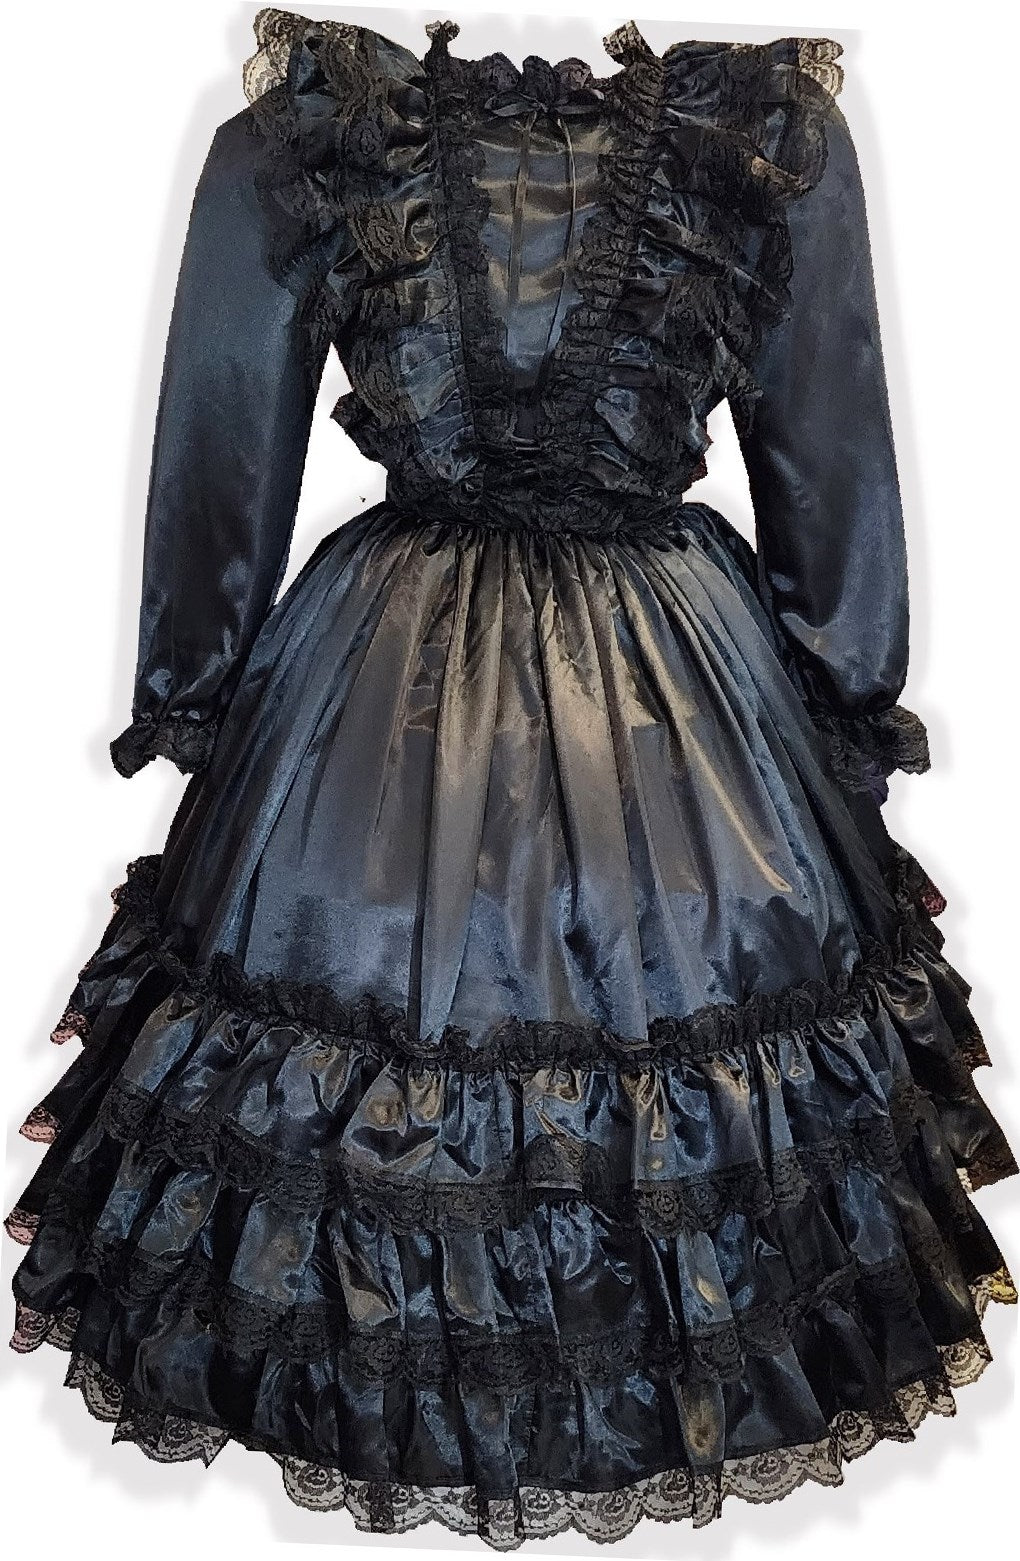 Ready-to-Wear Deluxe Black Satin Ruffles Gown Adult Little Girl Sissy Dress by Leanne's